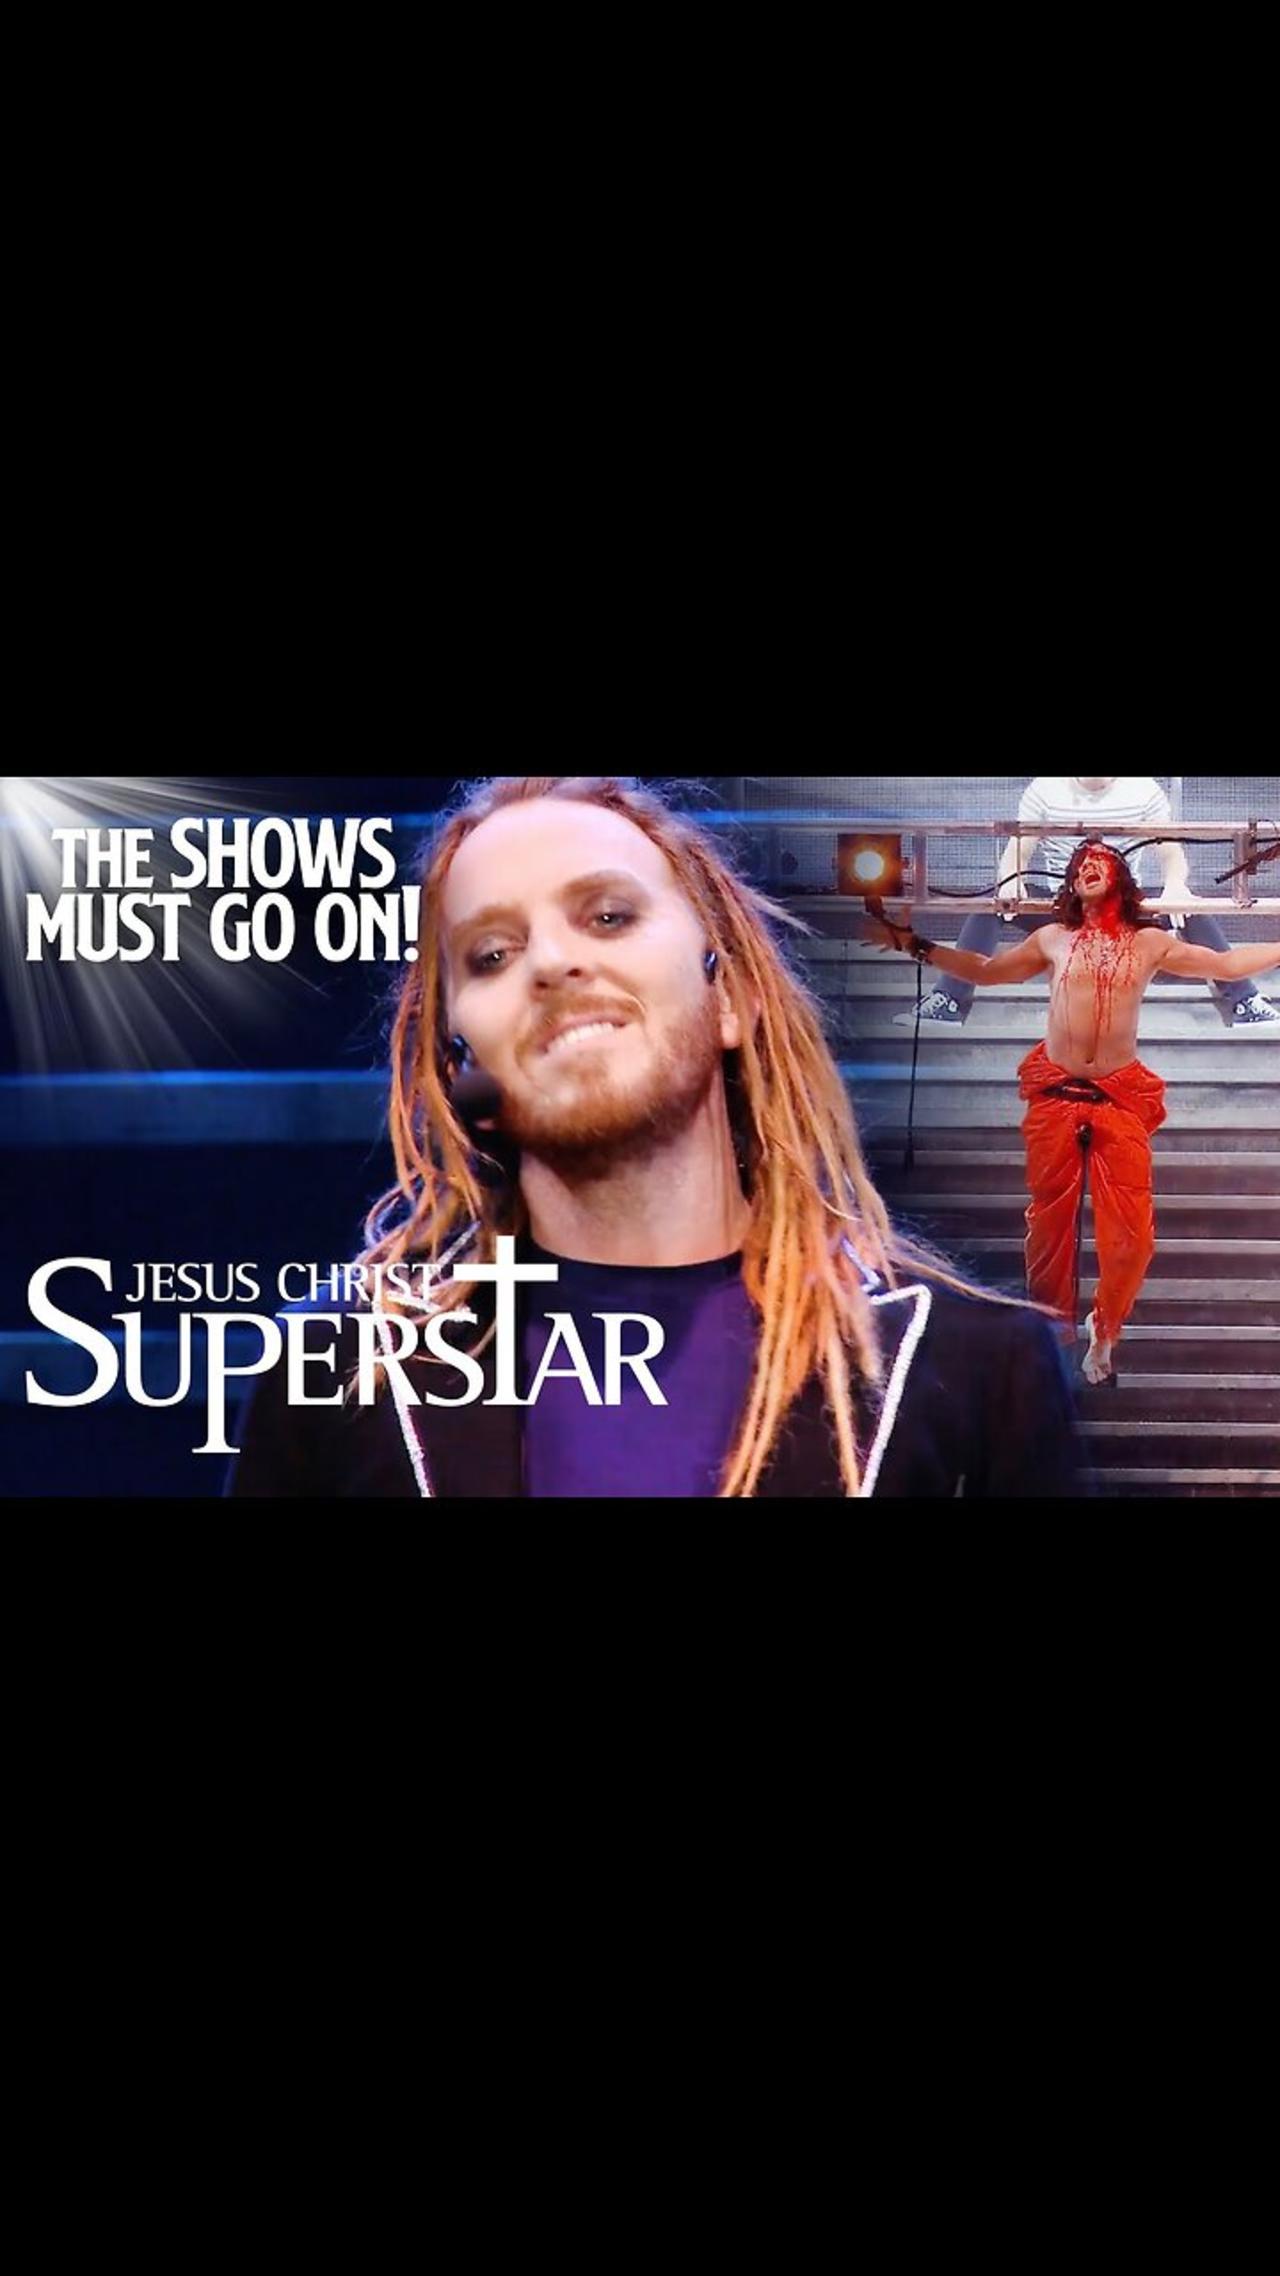 Jesus Christ Superstar Tim Minchin The show must go on